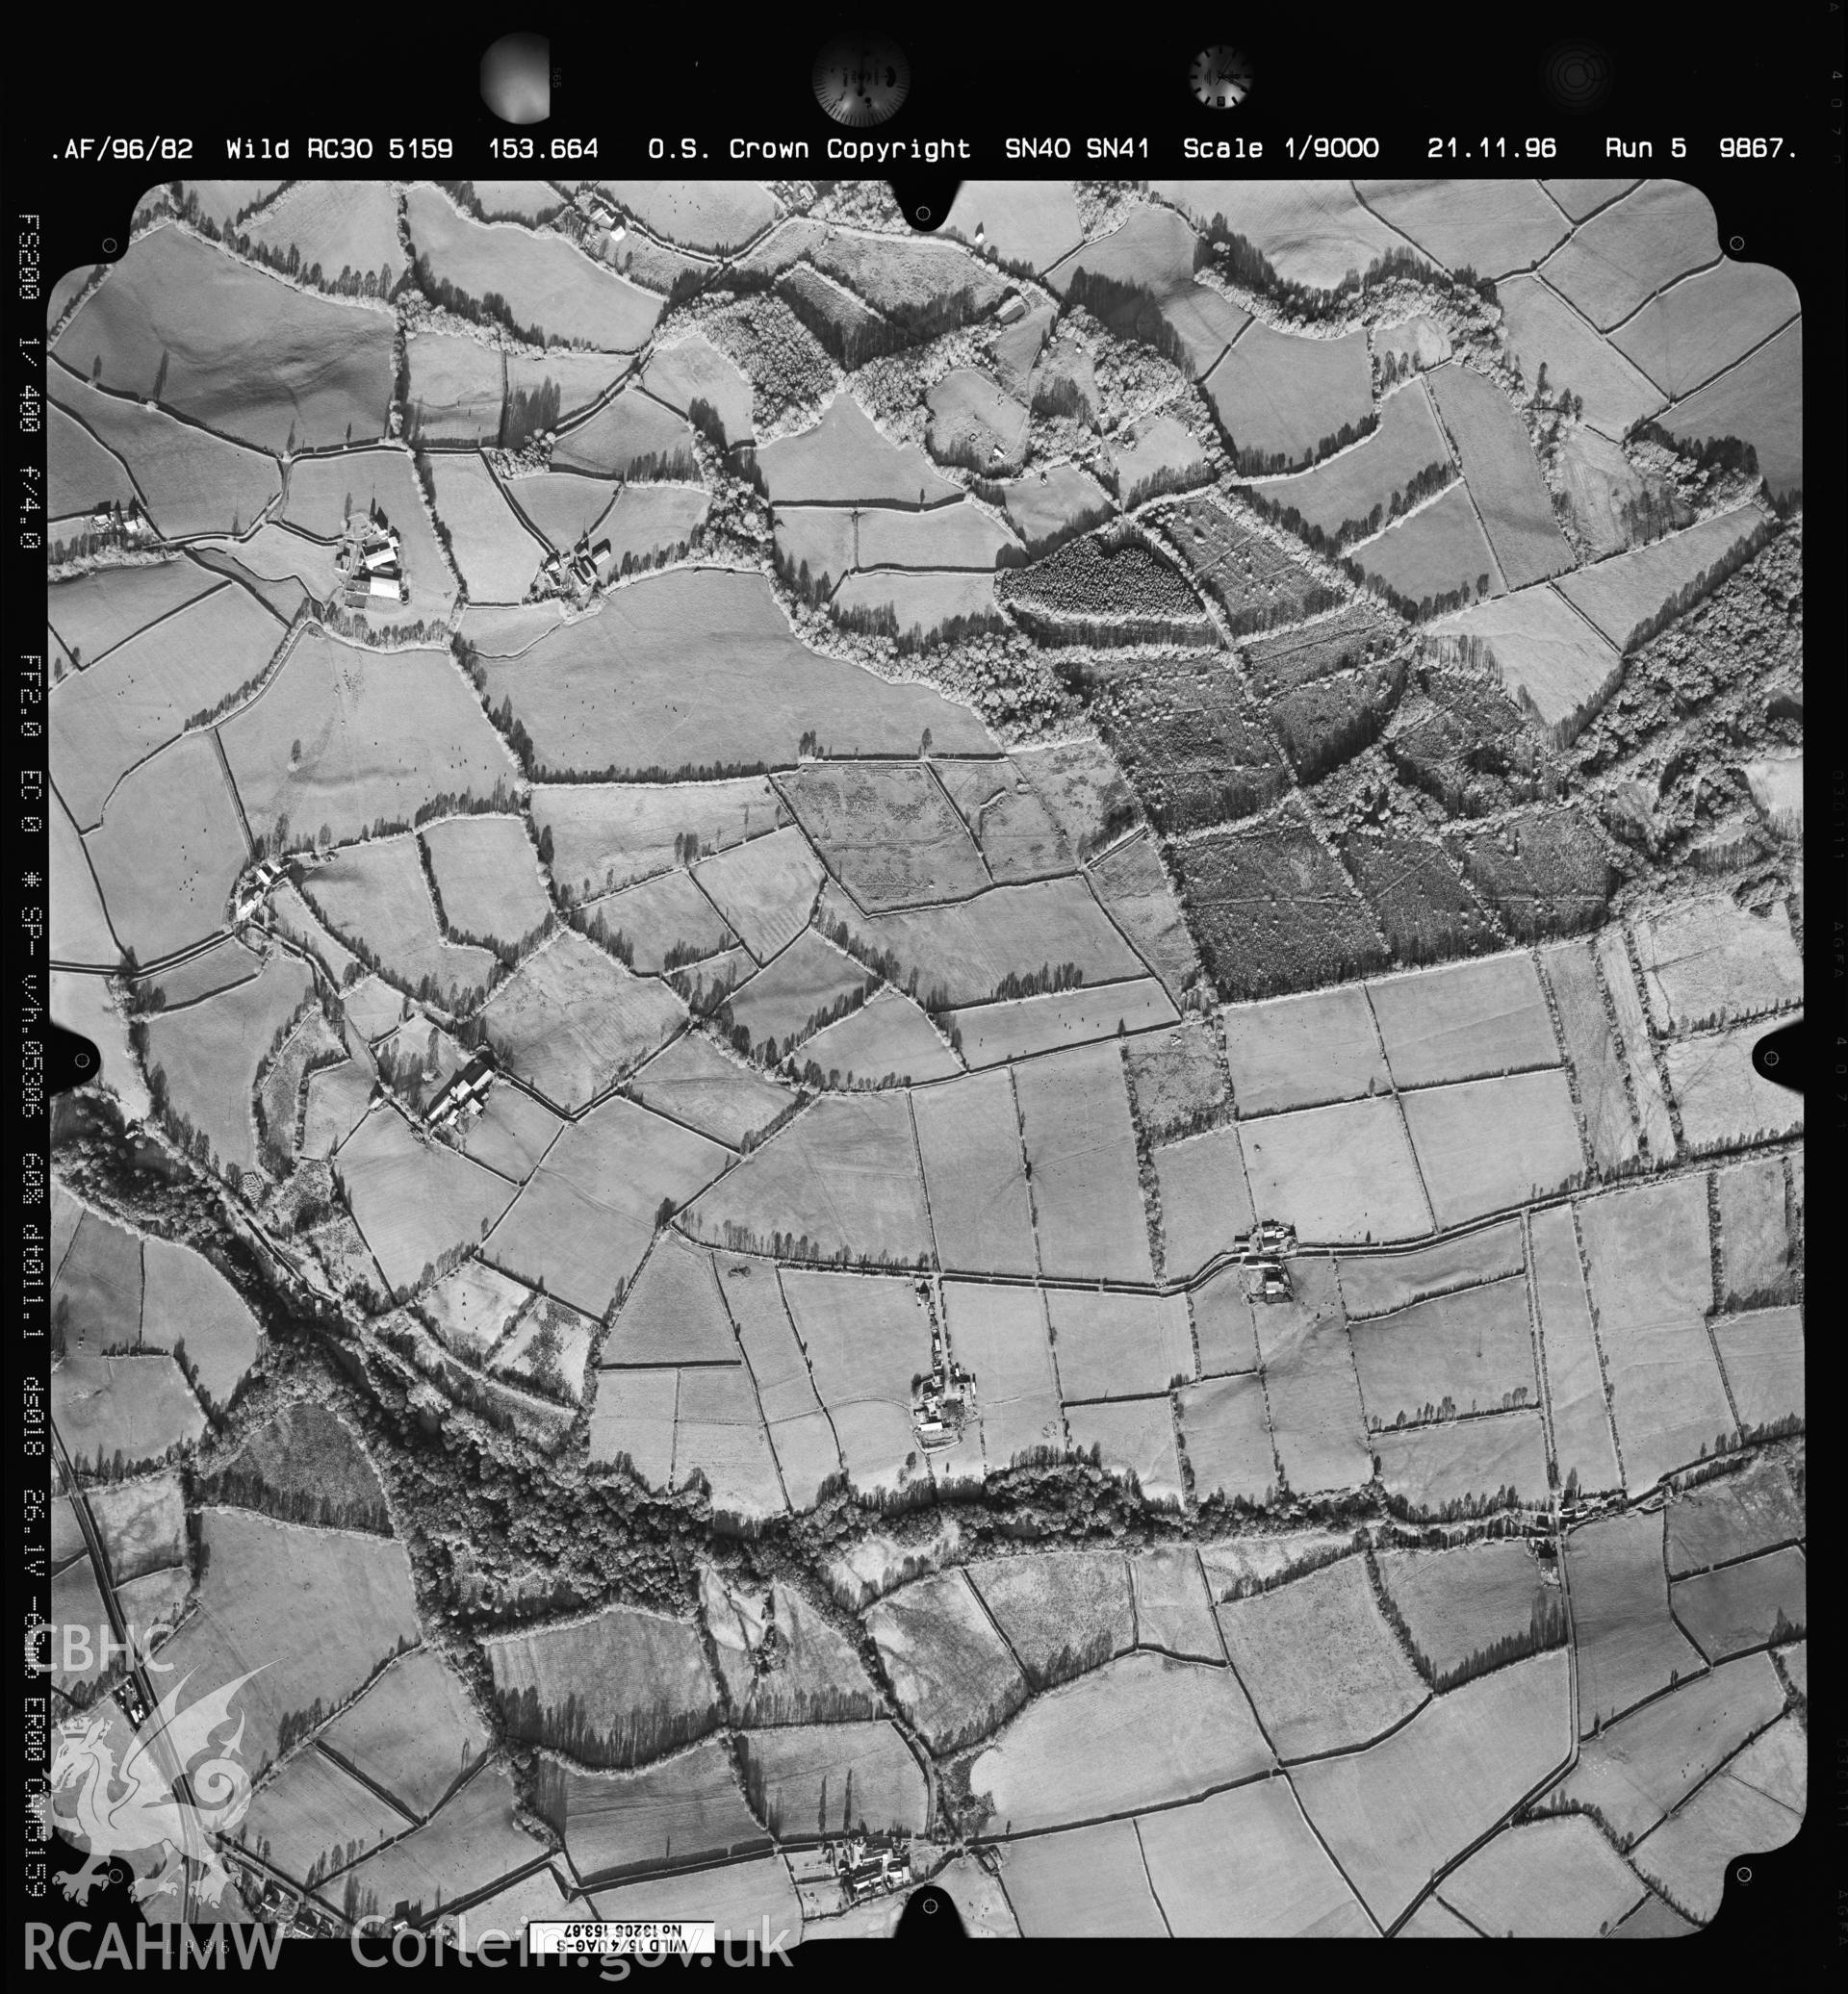 Digitized copy of an aerial photograph showing Llandyfaelog area, Carmarthen, taken by Ordnance Survey, 1996